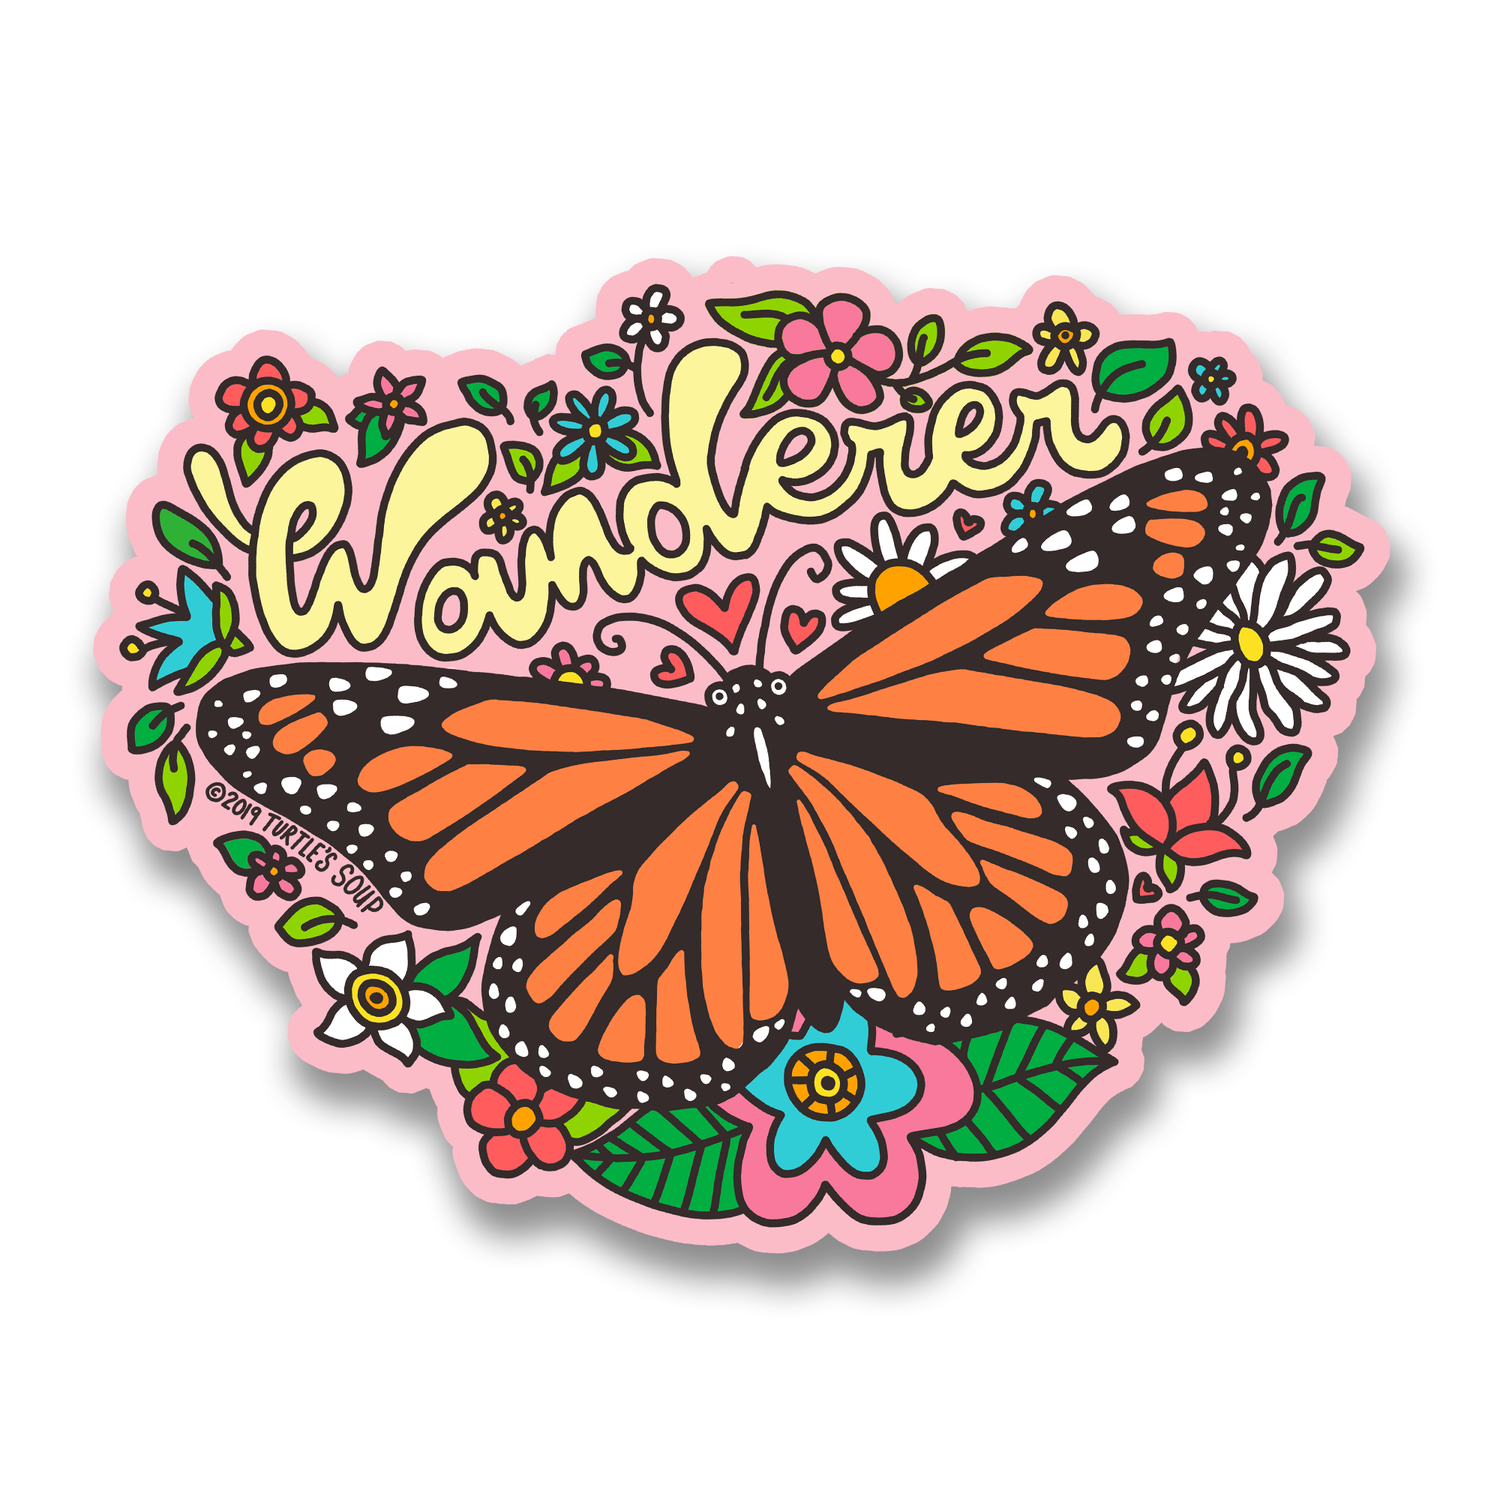 Butterfly wanderer pink floral sticker